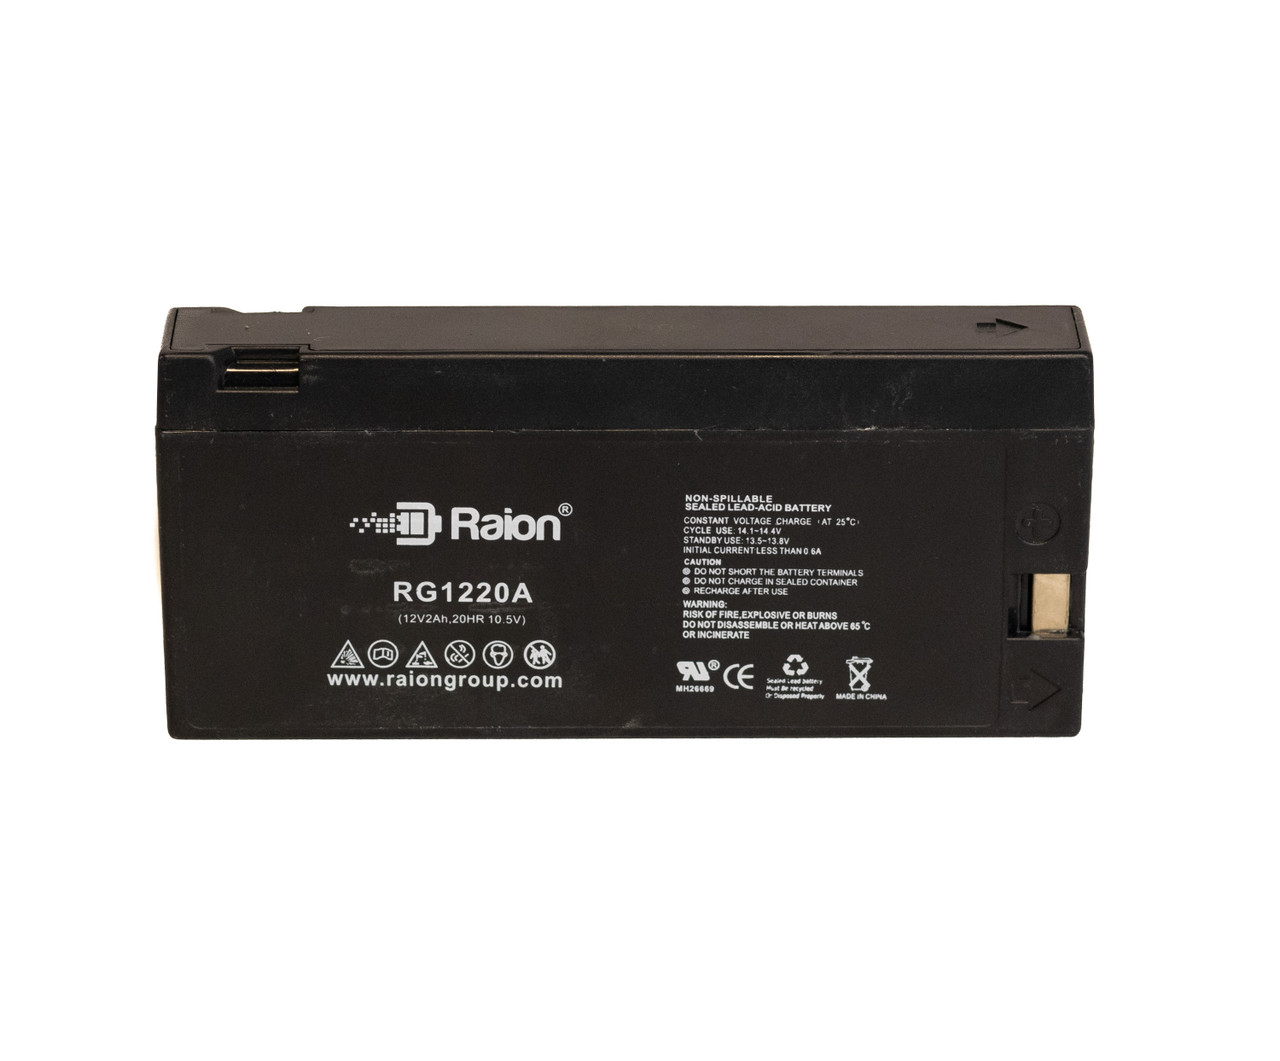 Raion Power RG1220A SLA Battery for JC Penney 686-6062